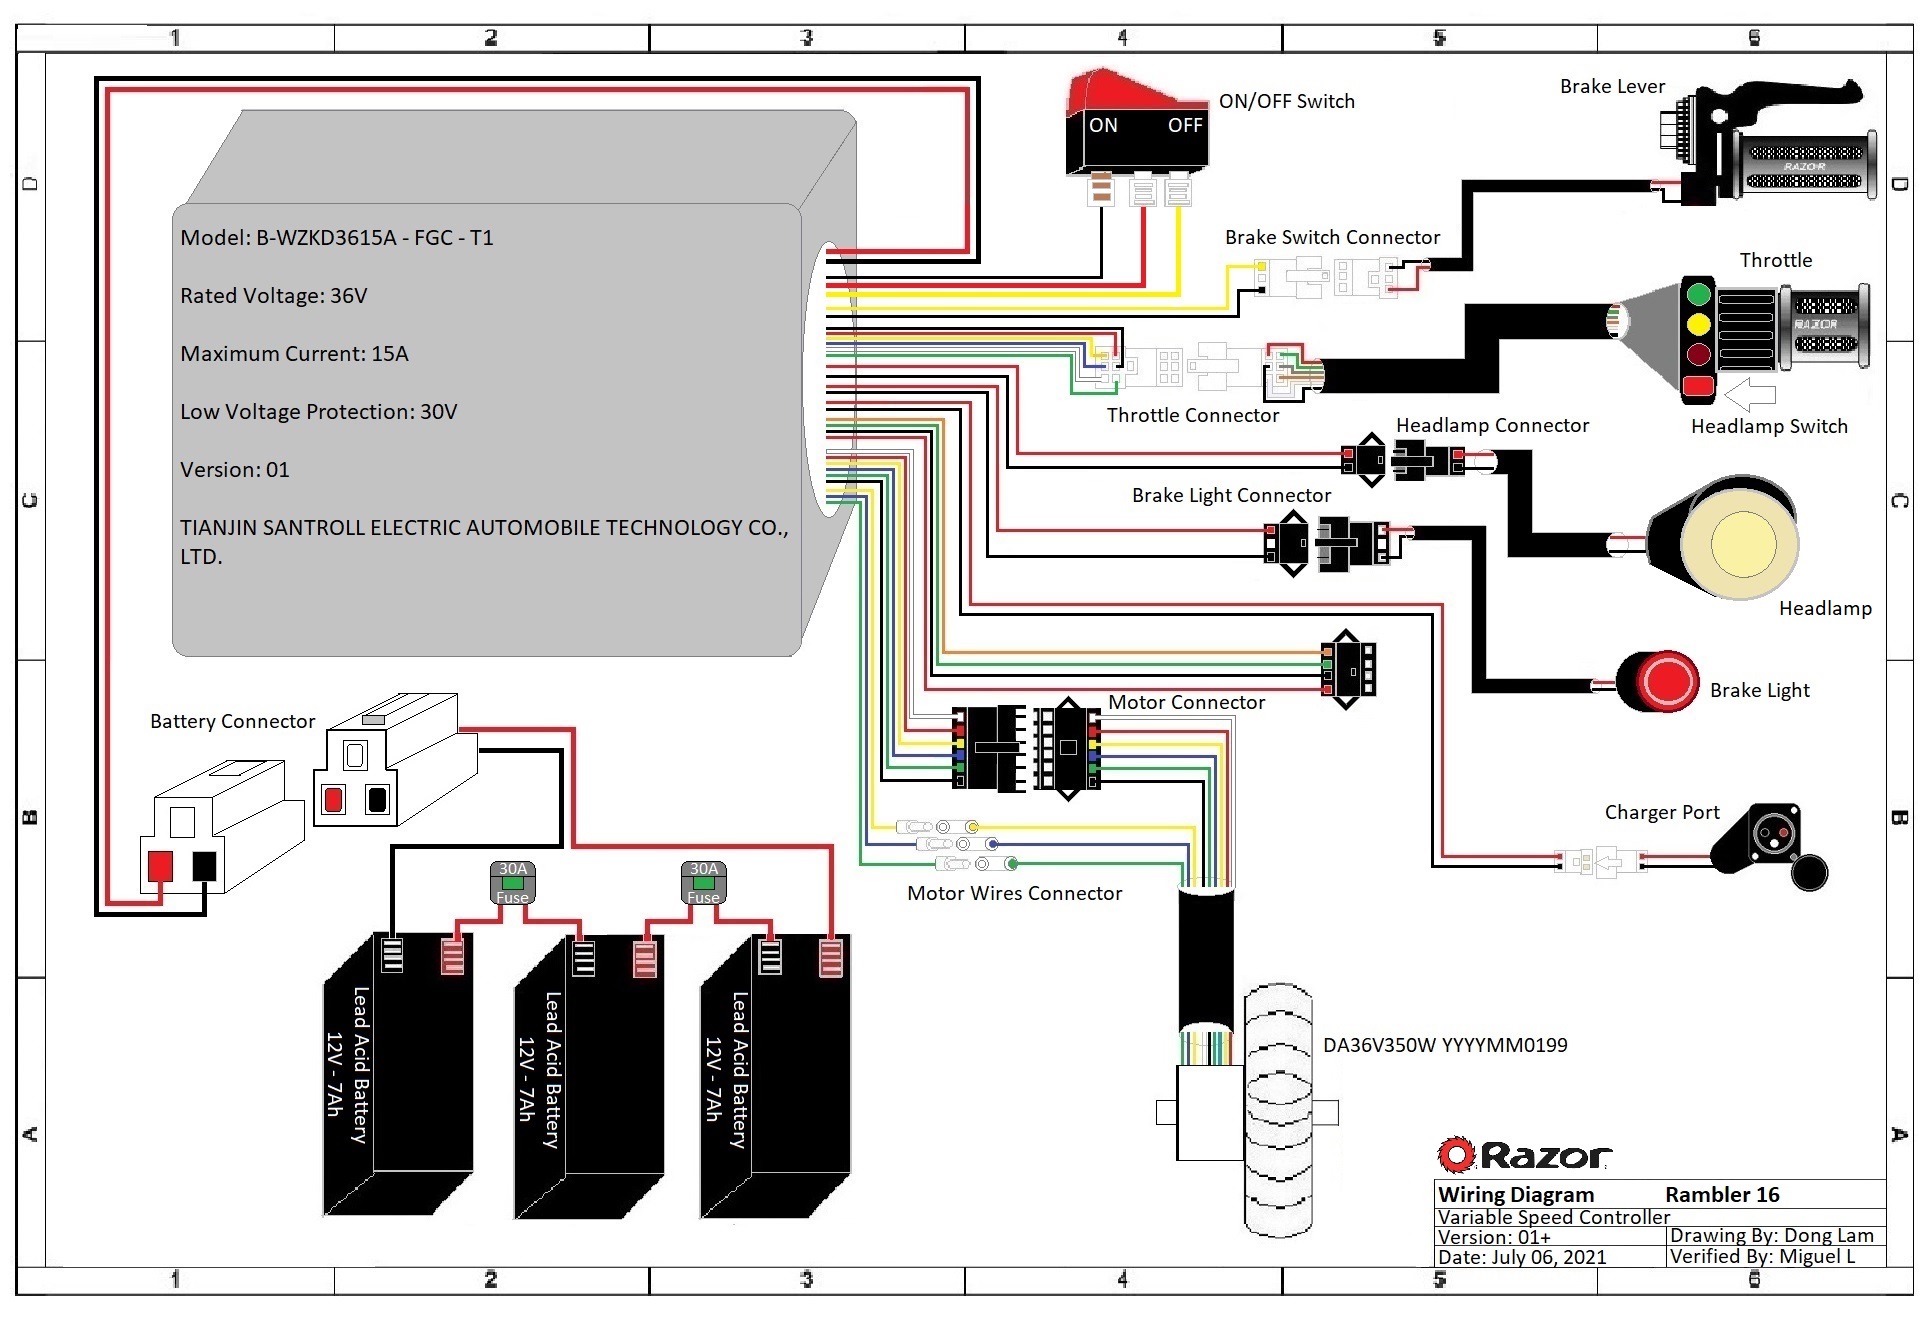 http://www.electricscooterparts.com/wiringdiagrams/razor-rambler-16-wiring-diagram.jpg